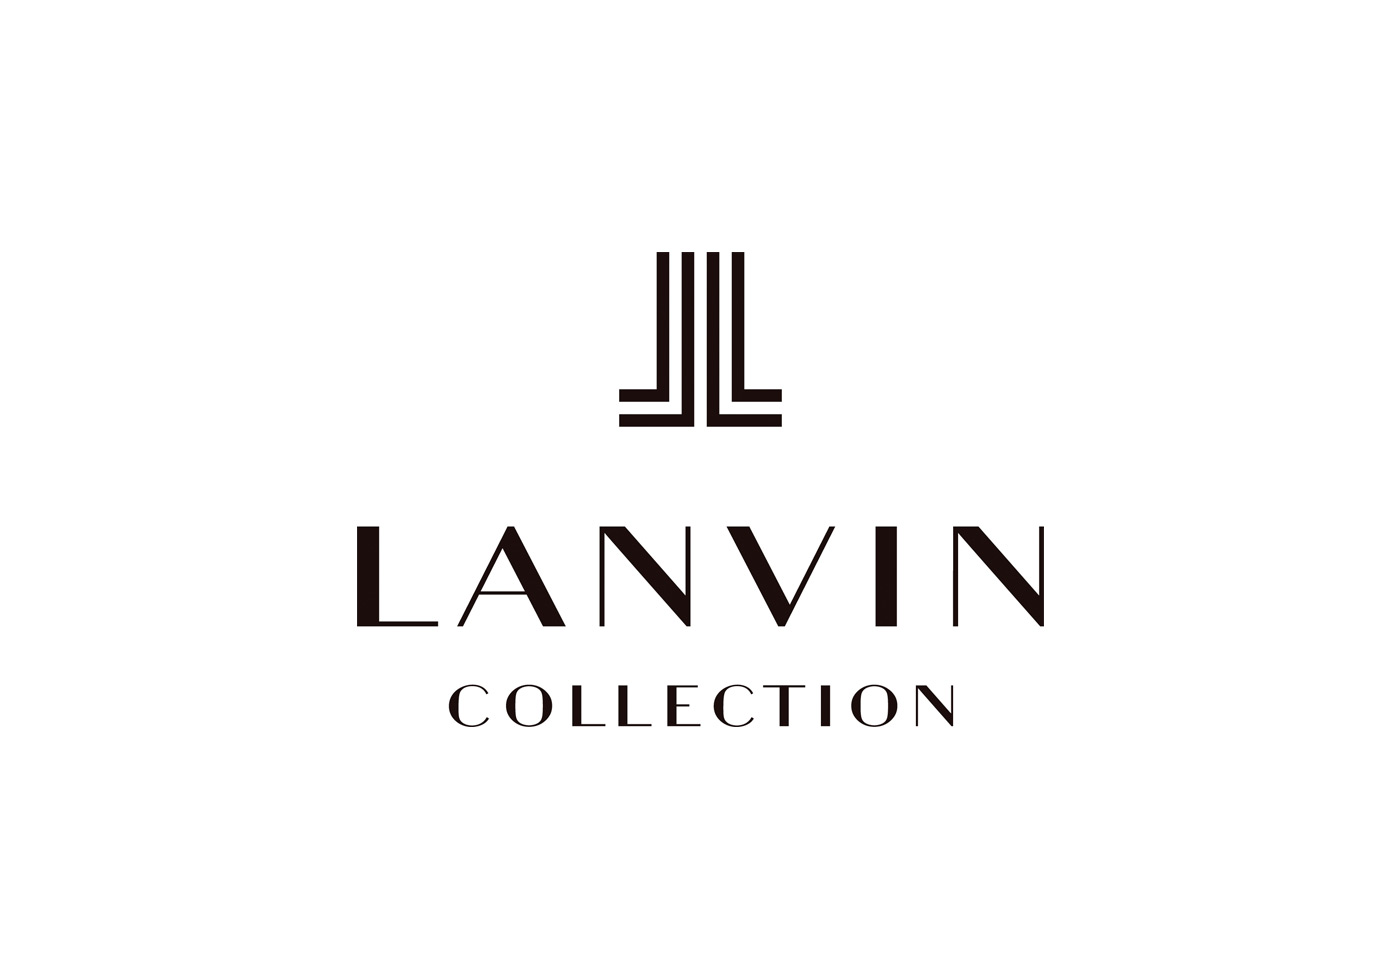 Lanvin collection